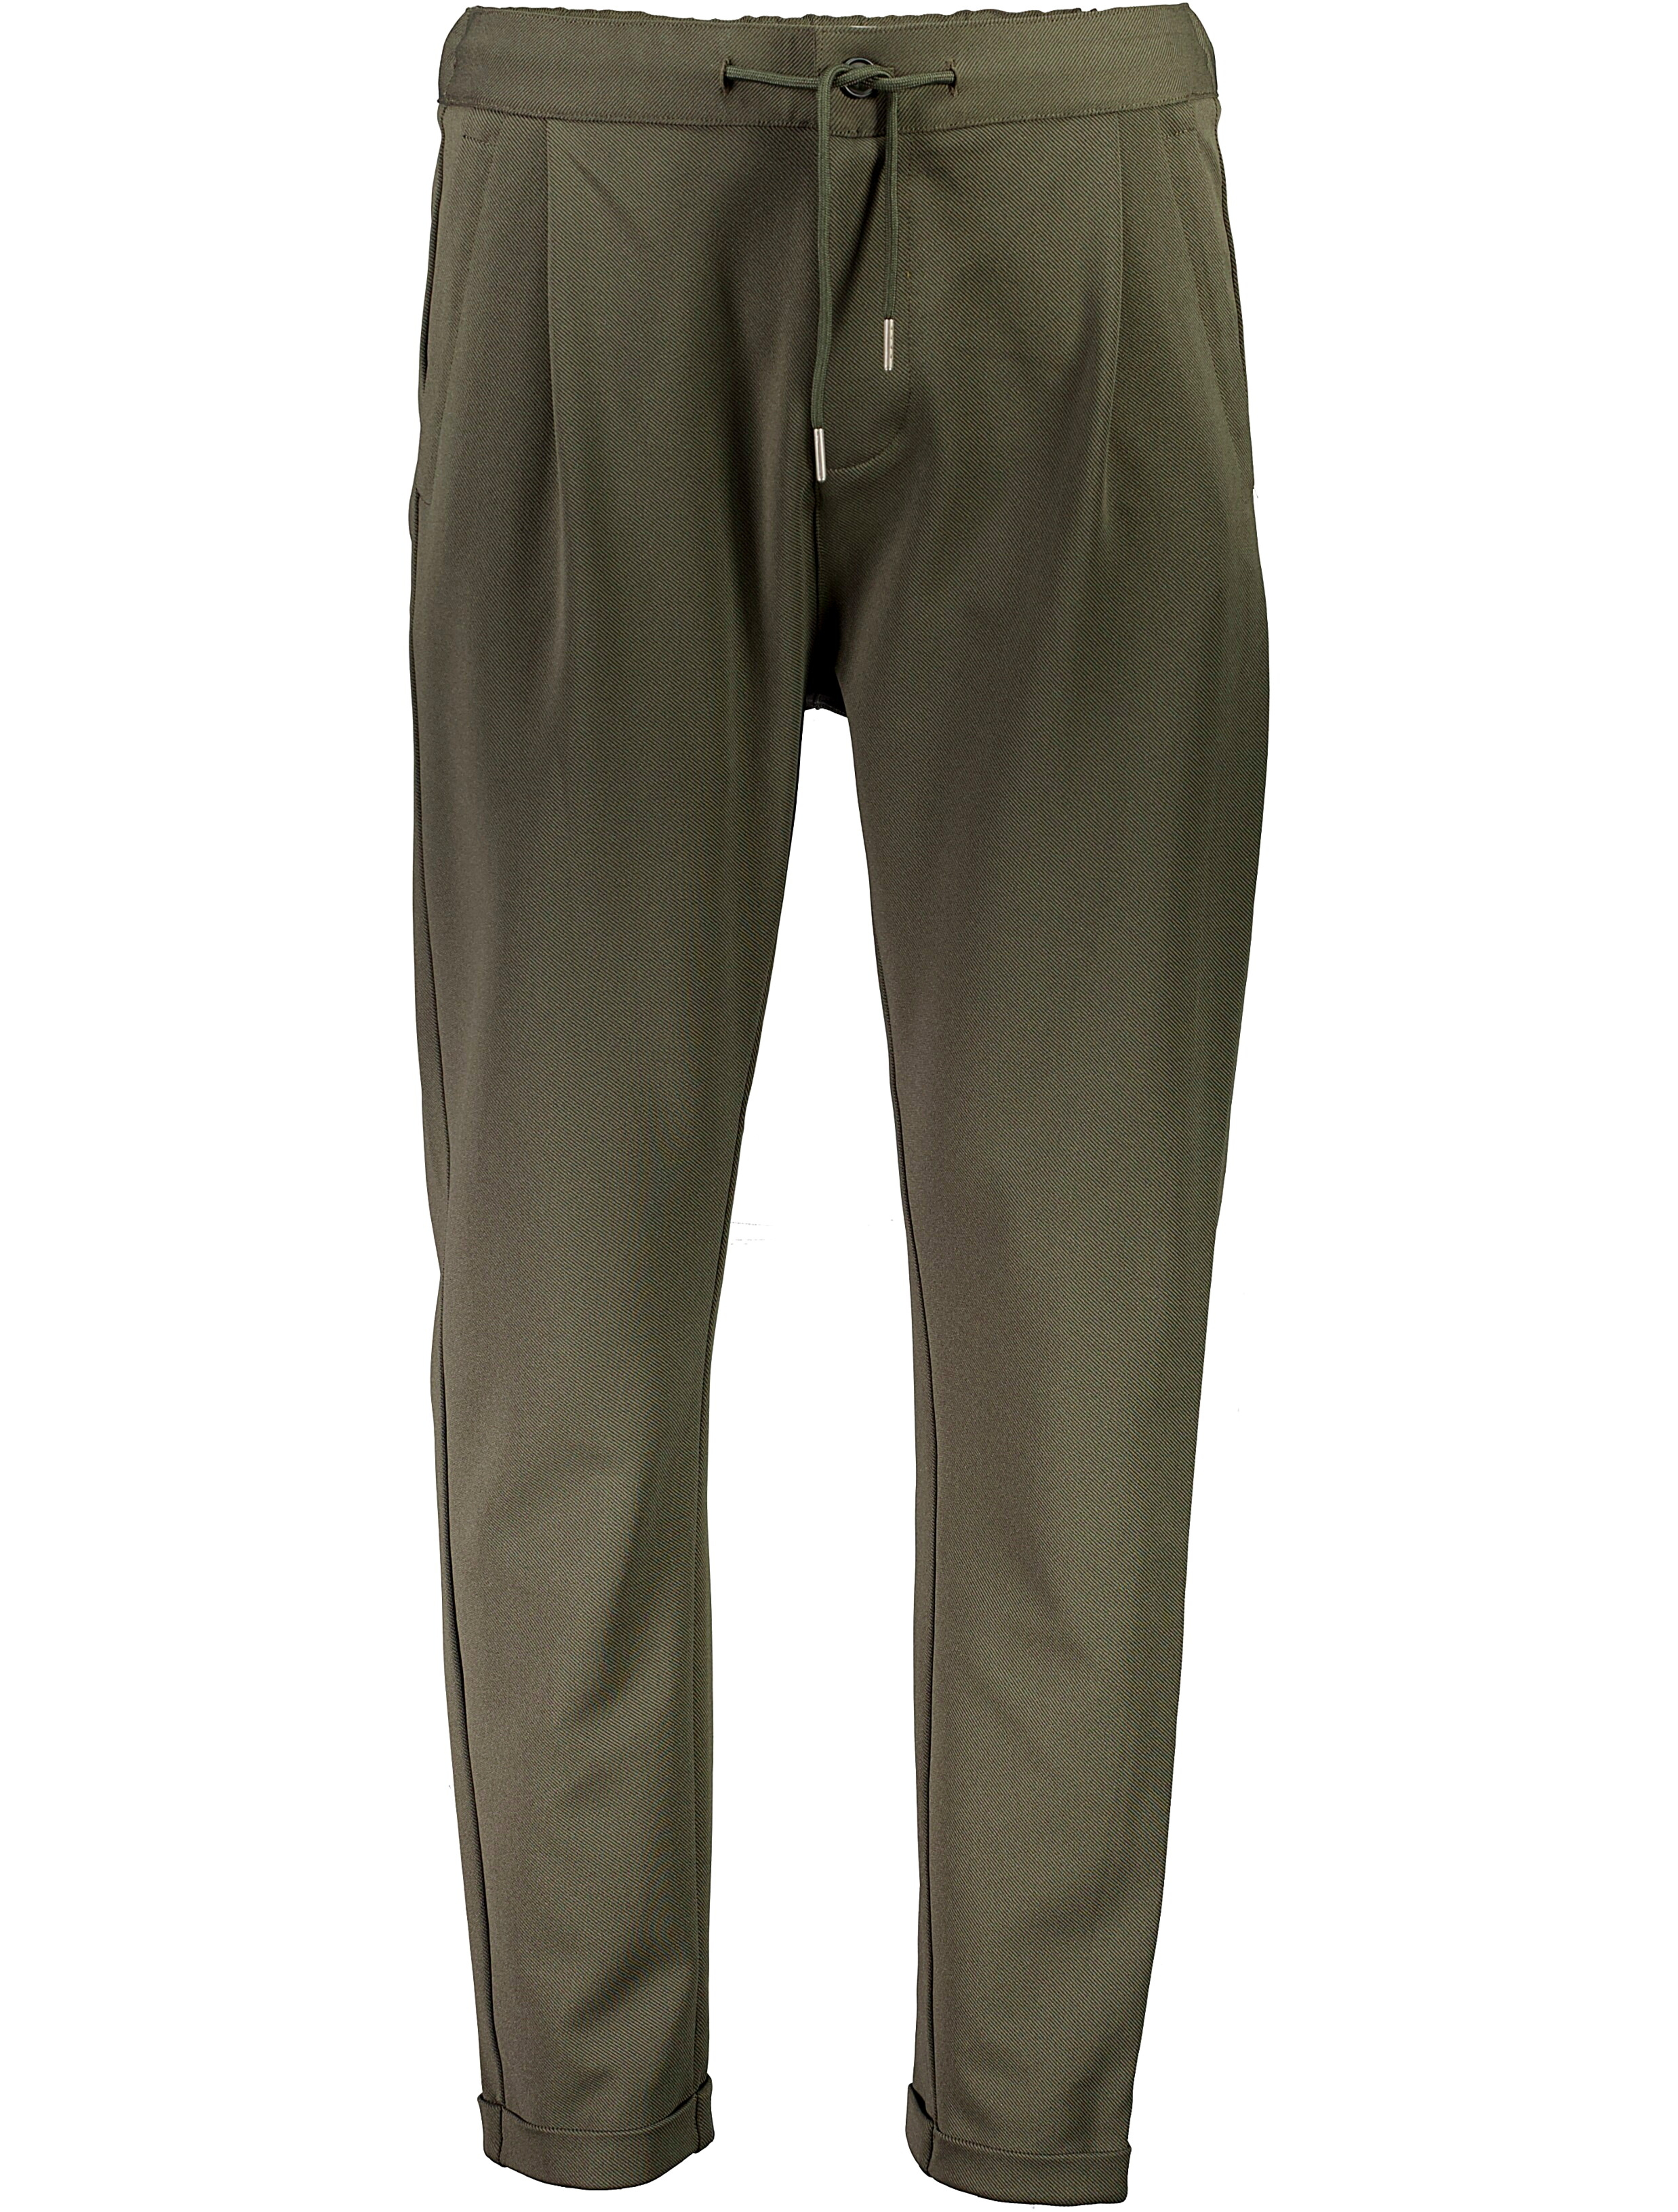 Lindbergh Casual pants green / dk army